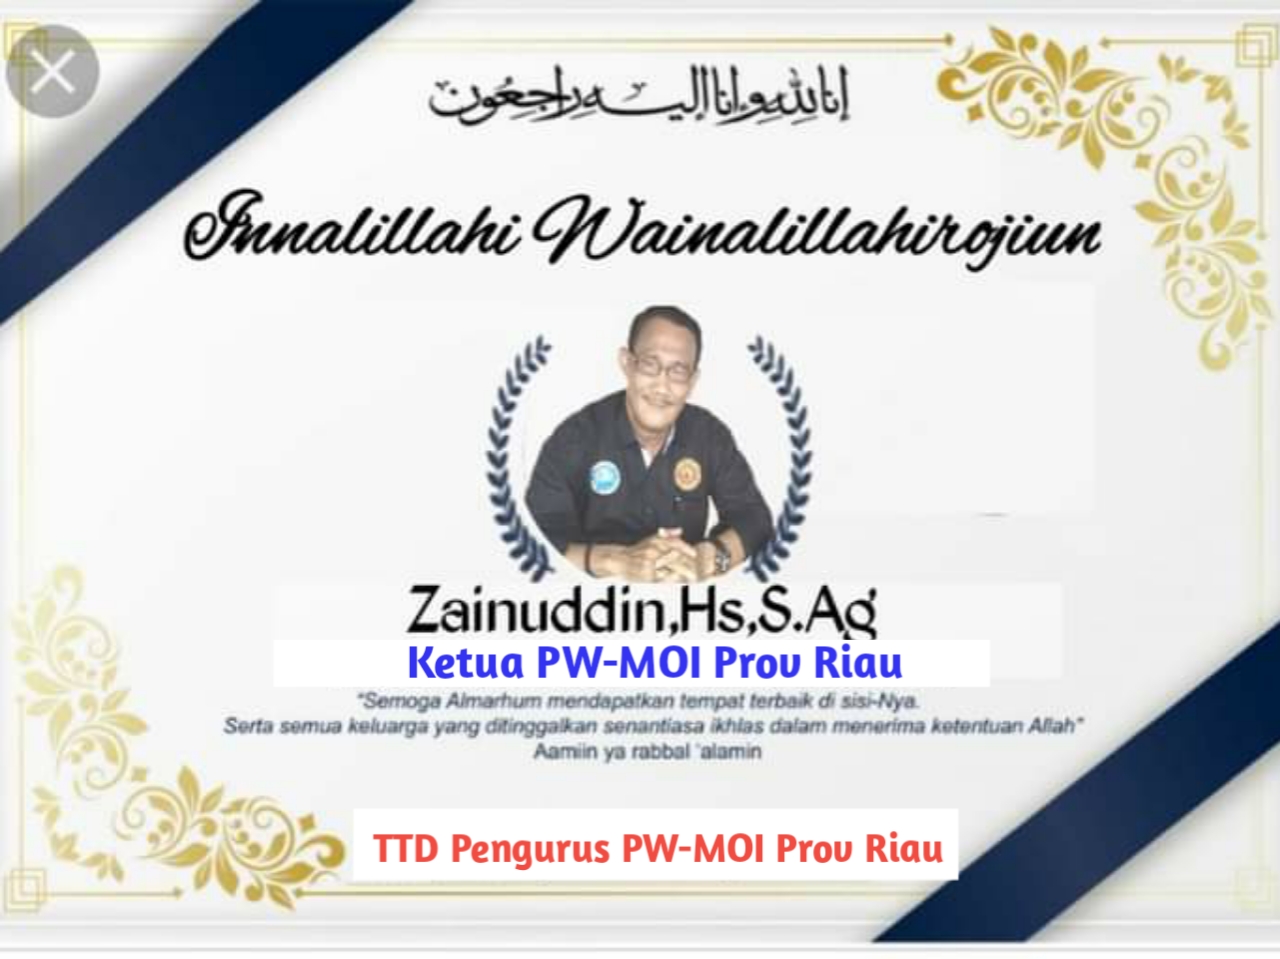 Berita Duka! Selamat Jalan Ketua PW-MOI RIAU Zainuddin HS, S.Ag